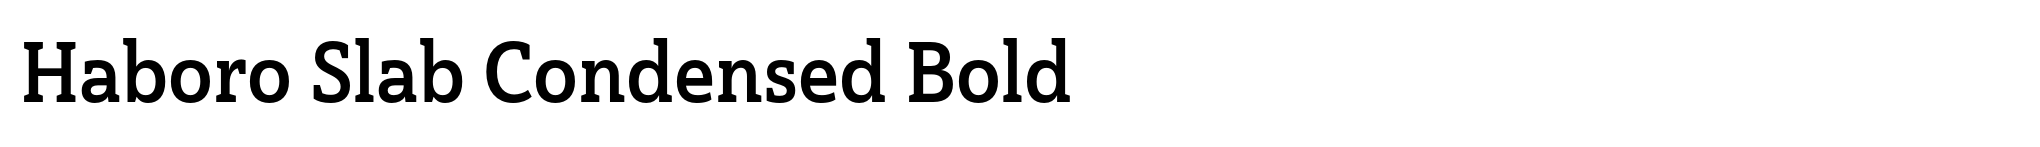 Haboro Slab Condensed Bold image